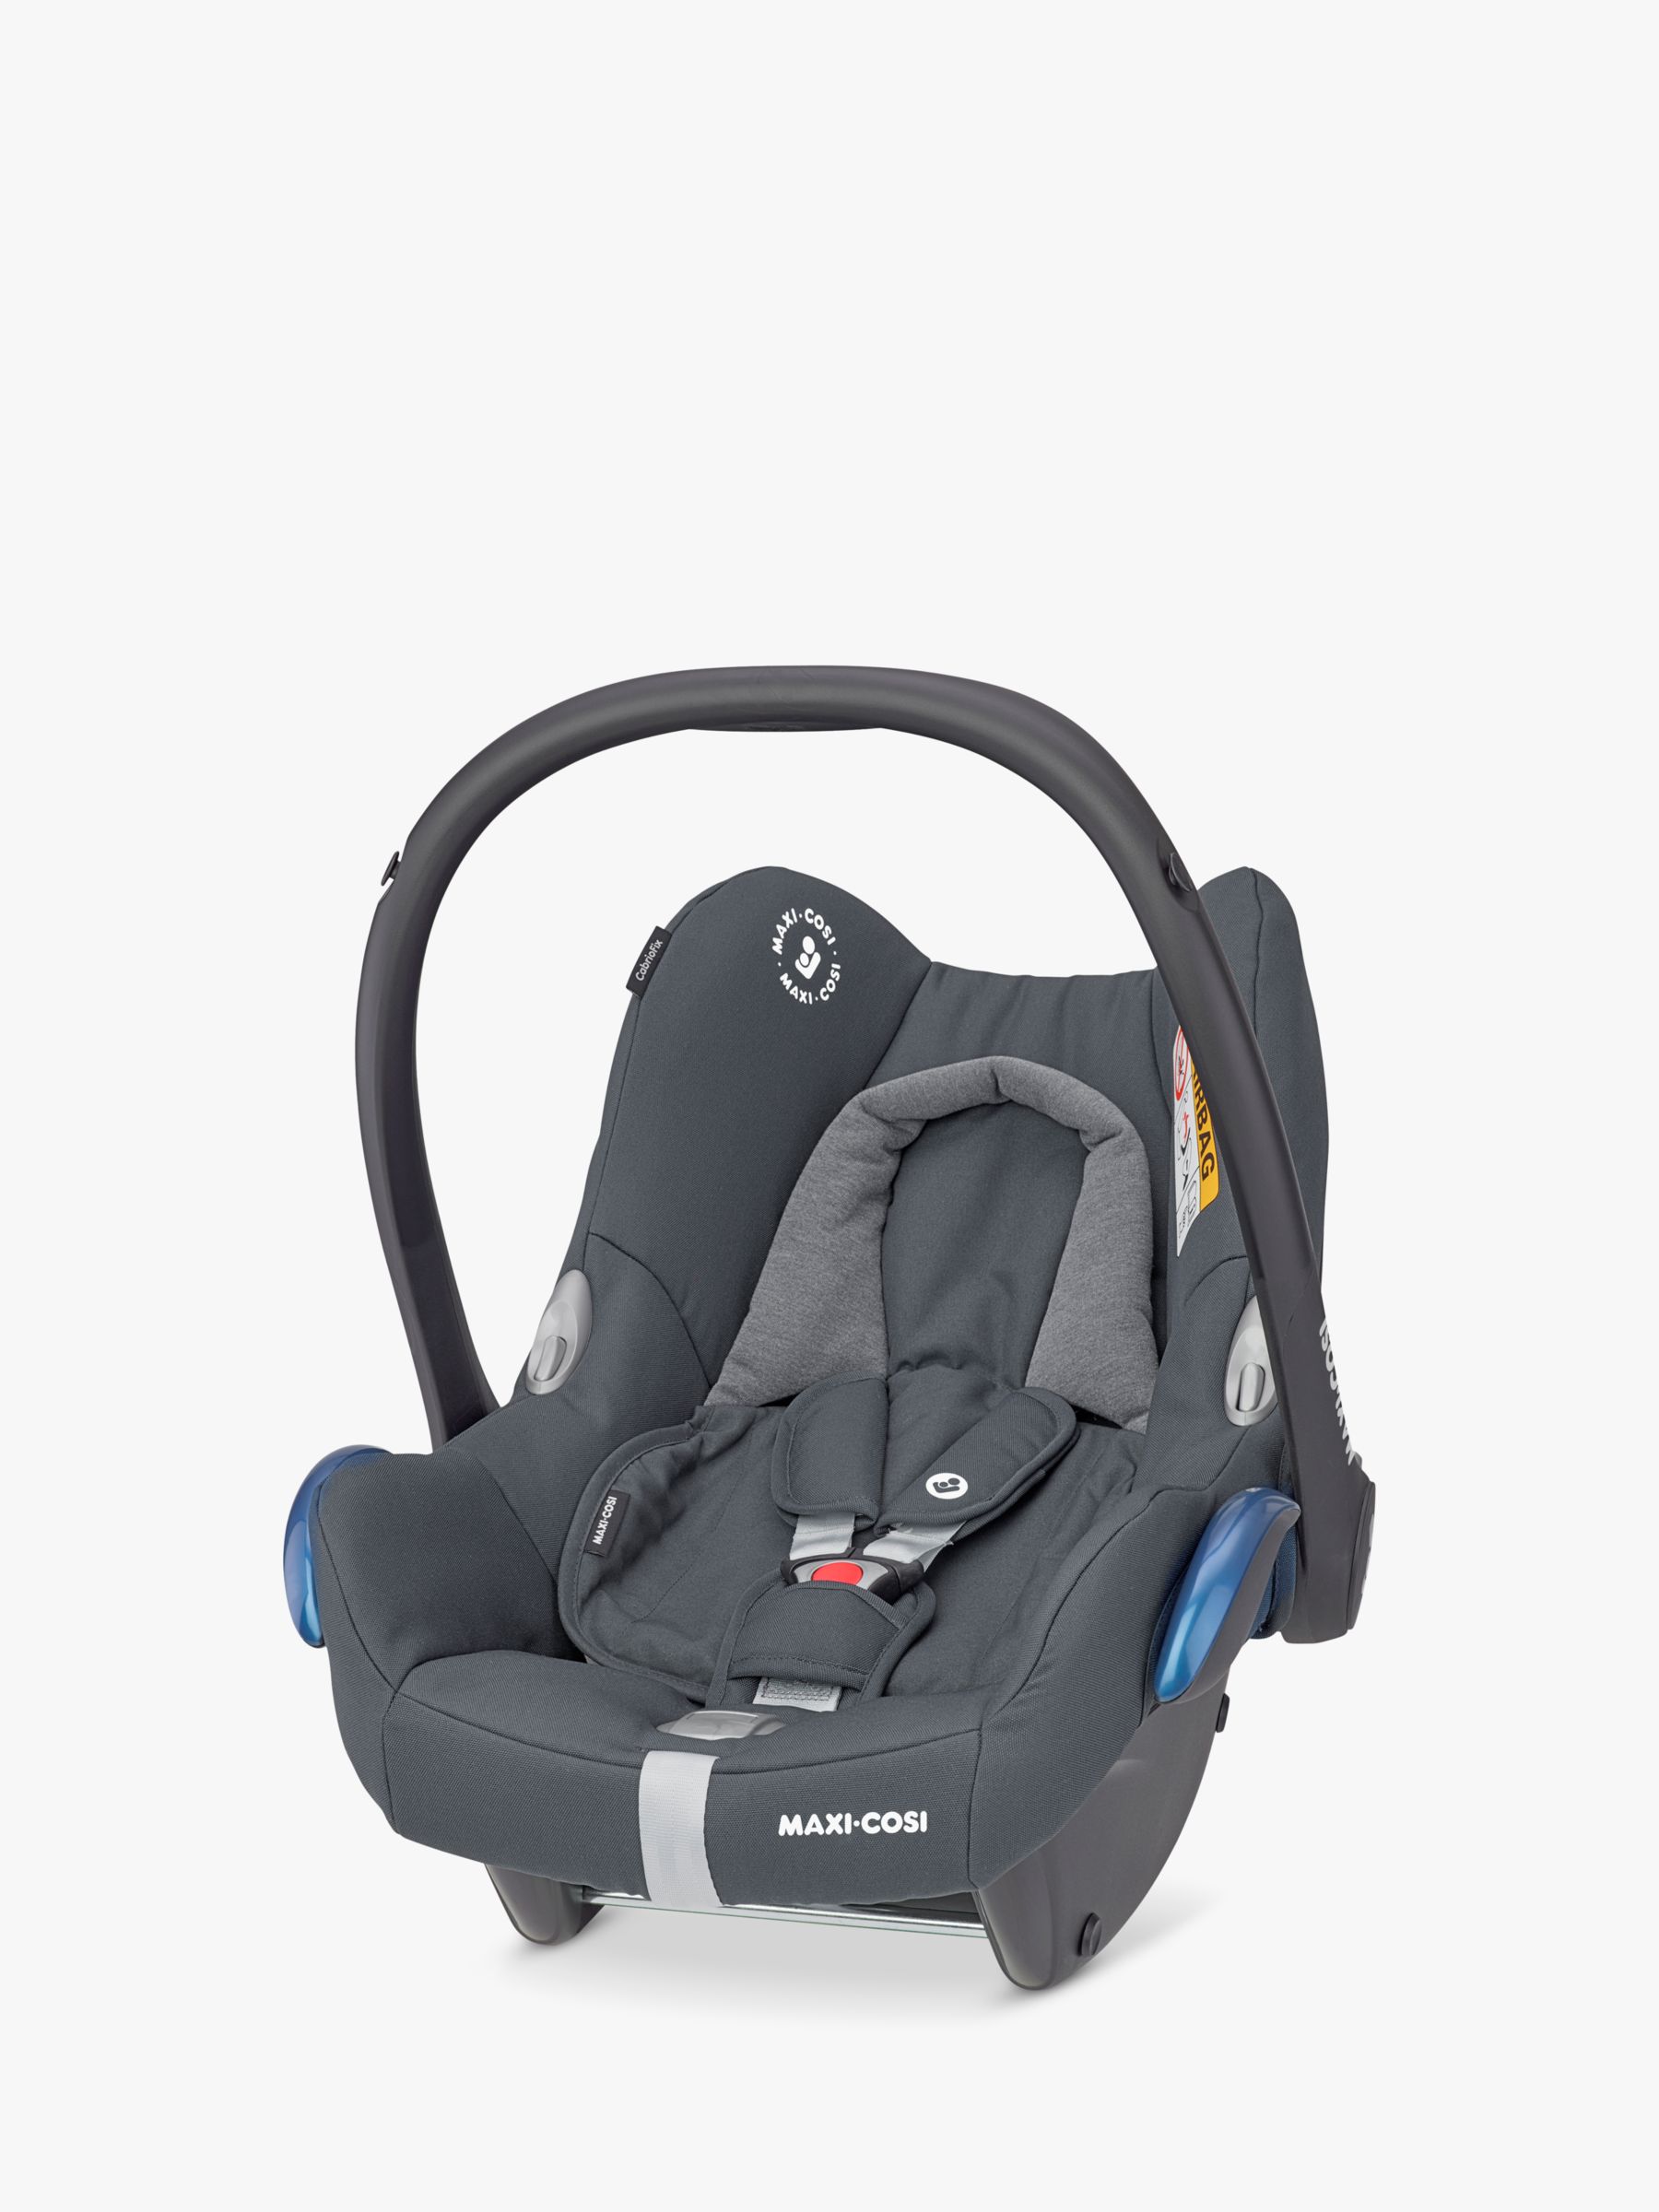 Maxi Cosi Cabriofix Group 0 Baby Car Seat Essential Graphite At John Lewis Partners